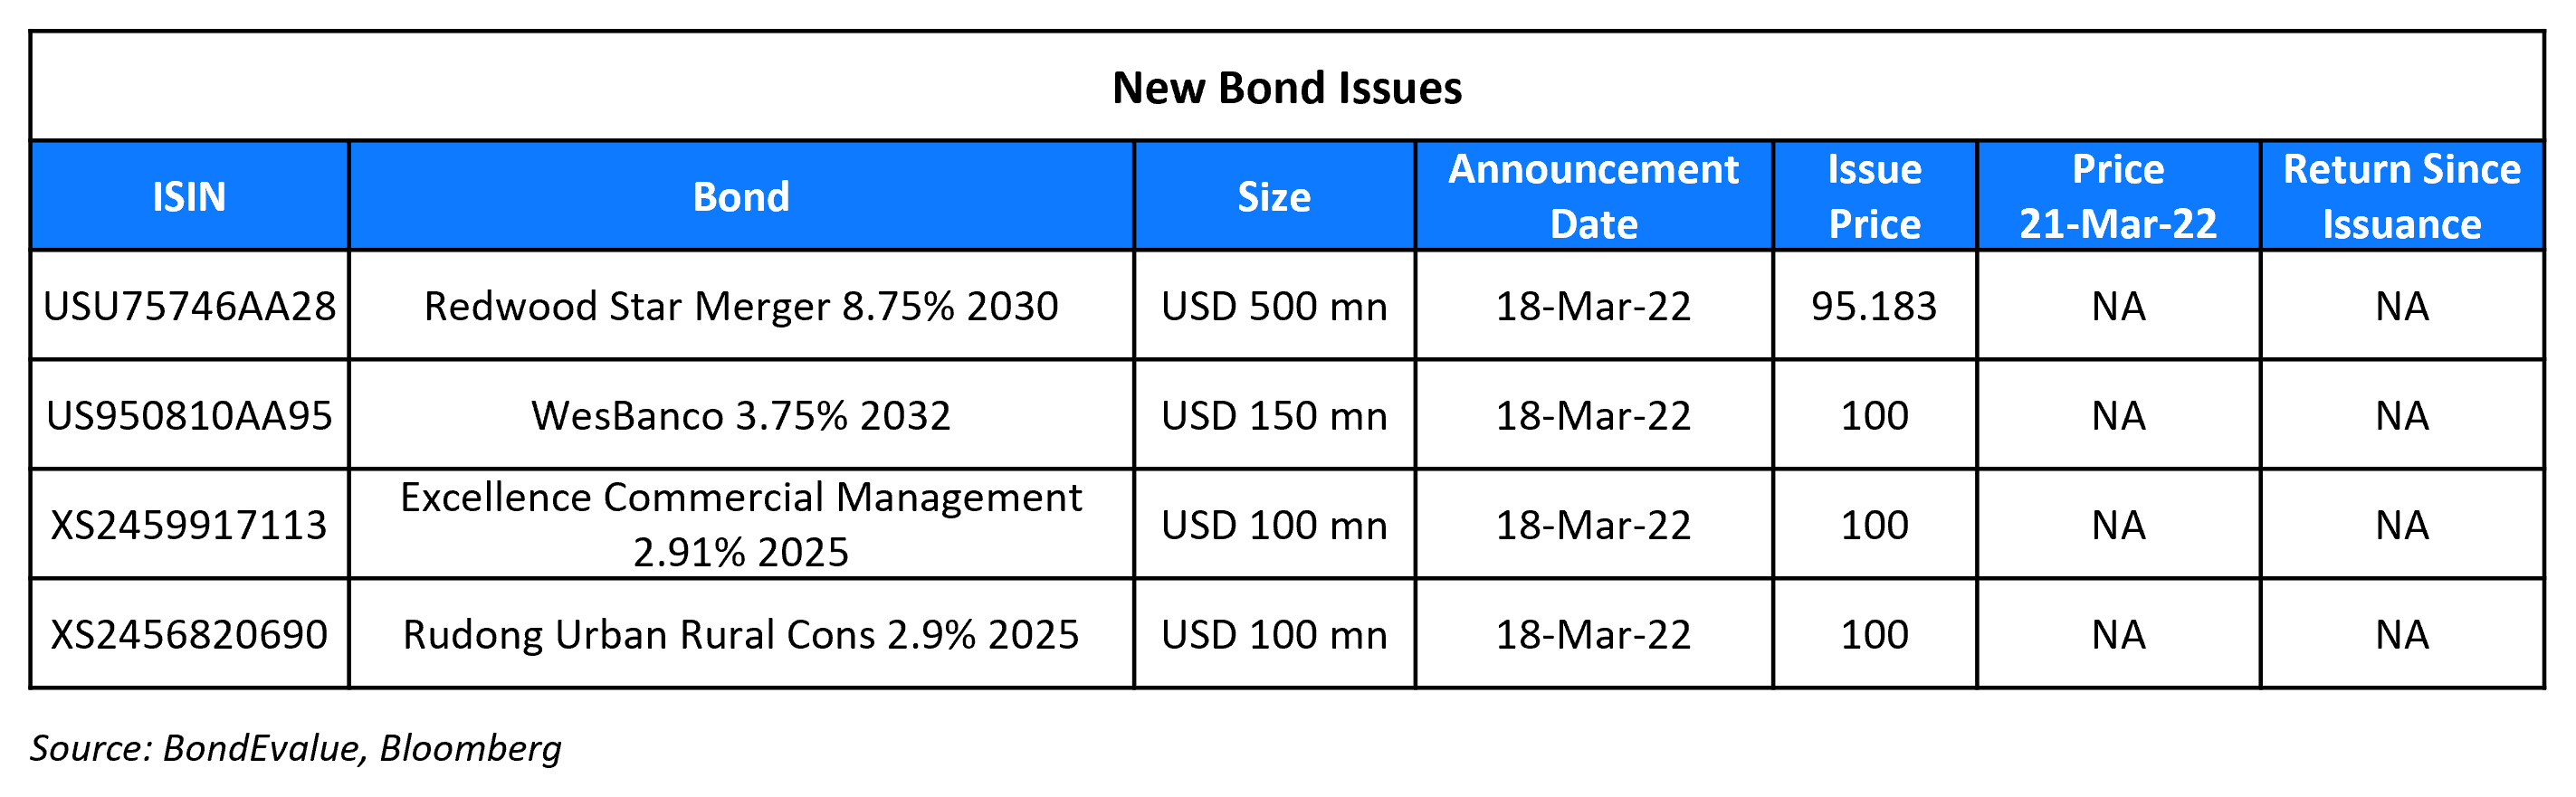 New Bond Issues 21 Mar